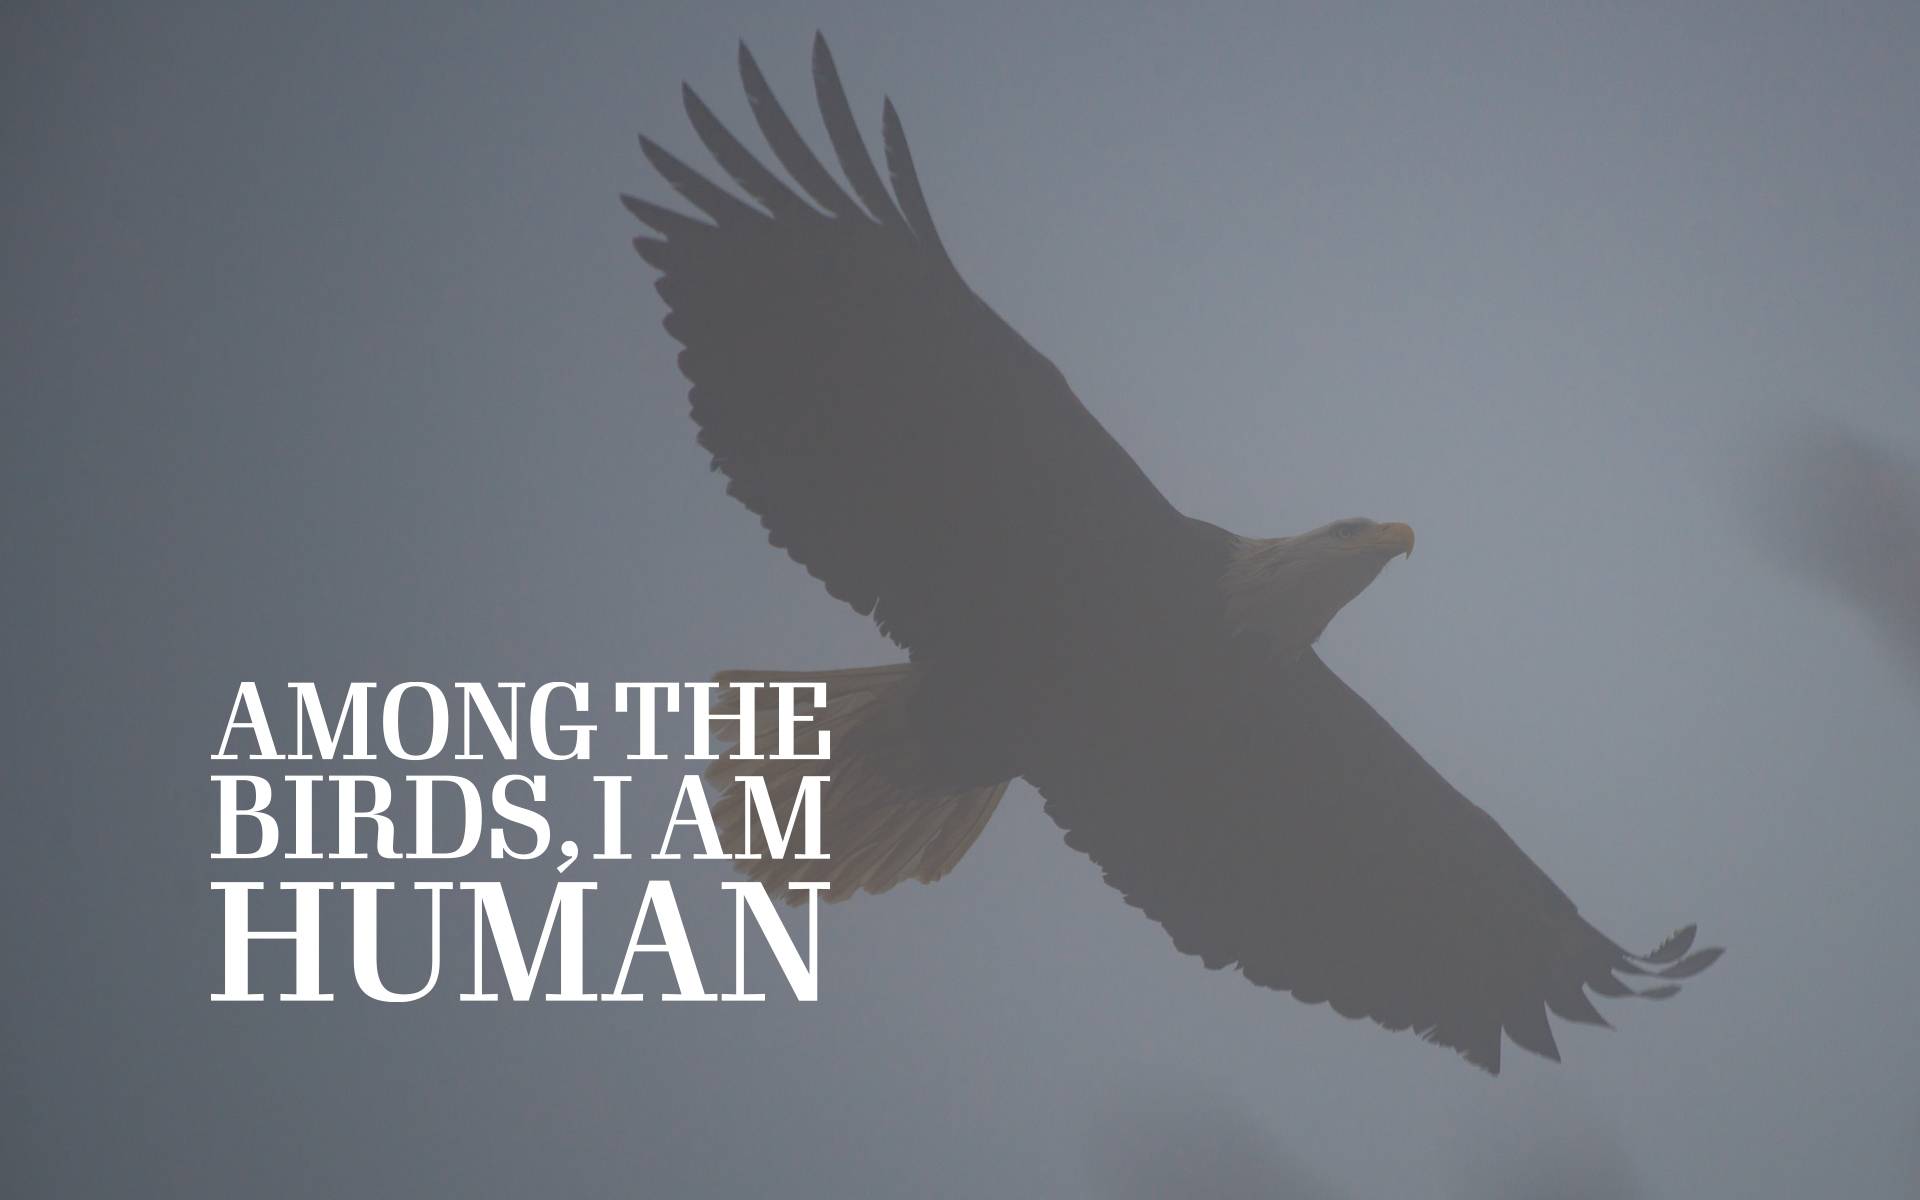 Among the Birds, I am Human